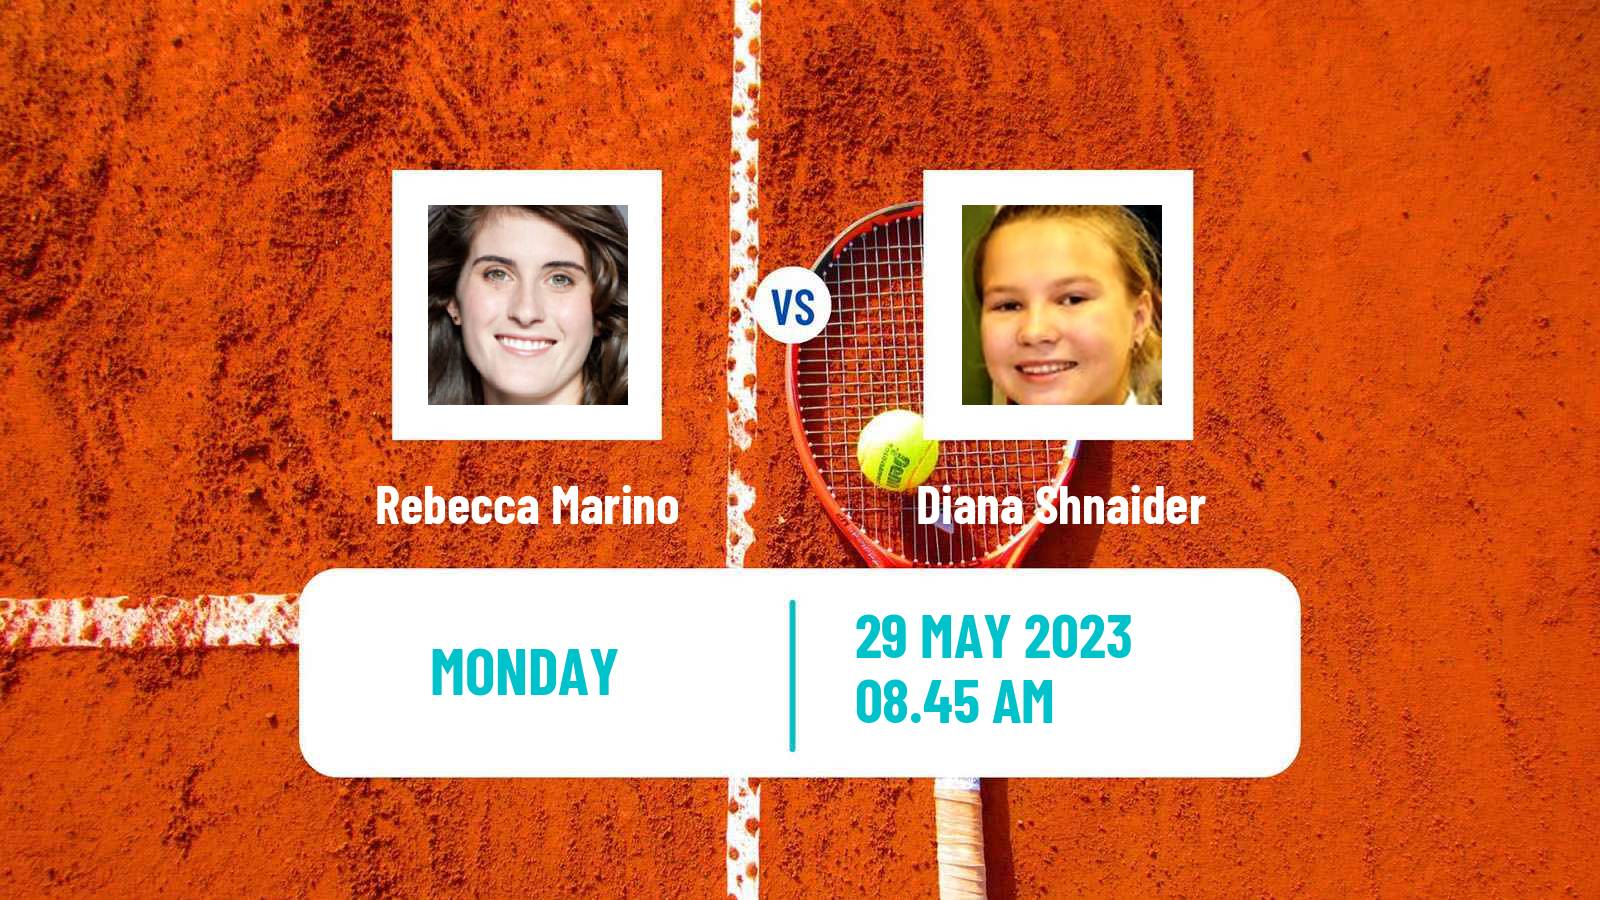 Tennis WTA Roland Garros Rebecca Marino - Diana Shnaider